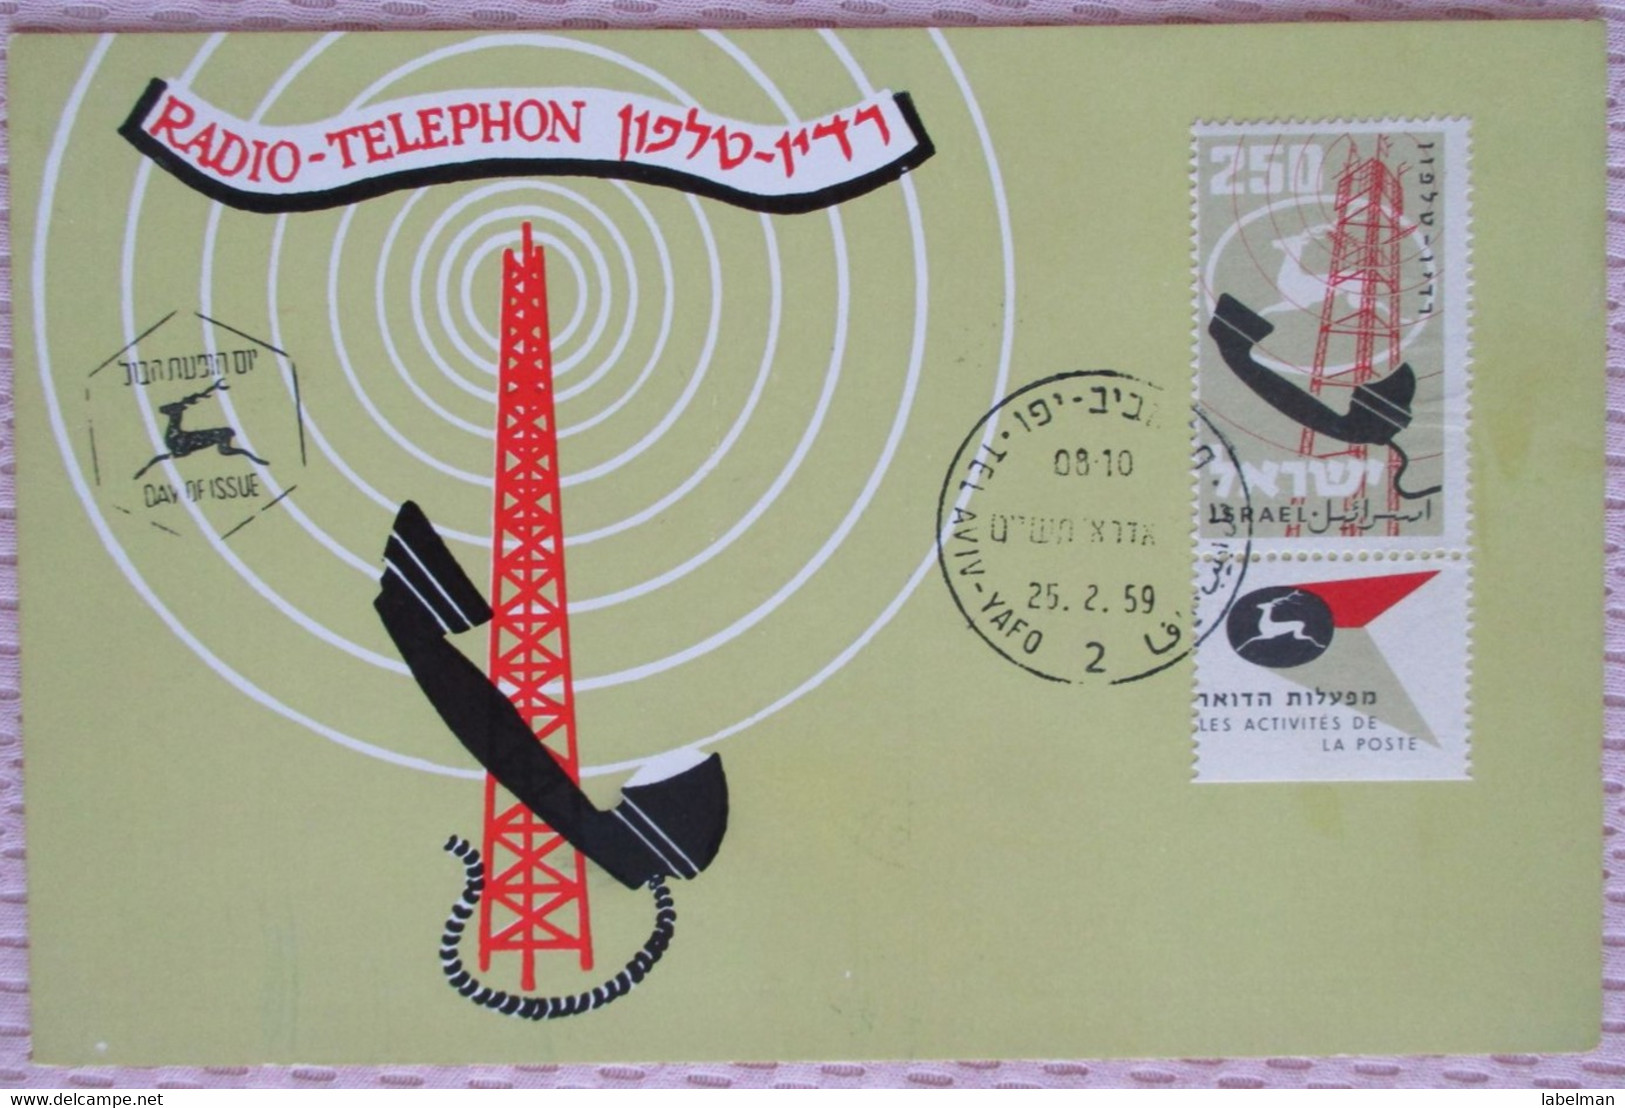 ISRAEL POSTIL POSTAL SERVICES POST RADIO TELEPHON 1959 CPM POSTCARD PICTURE PHOTO CARD CARTOLINA CARTE POSTALE STAMP - Israel